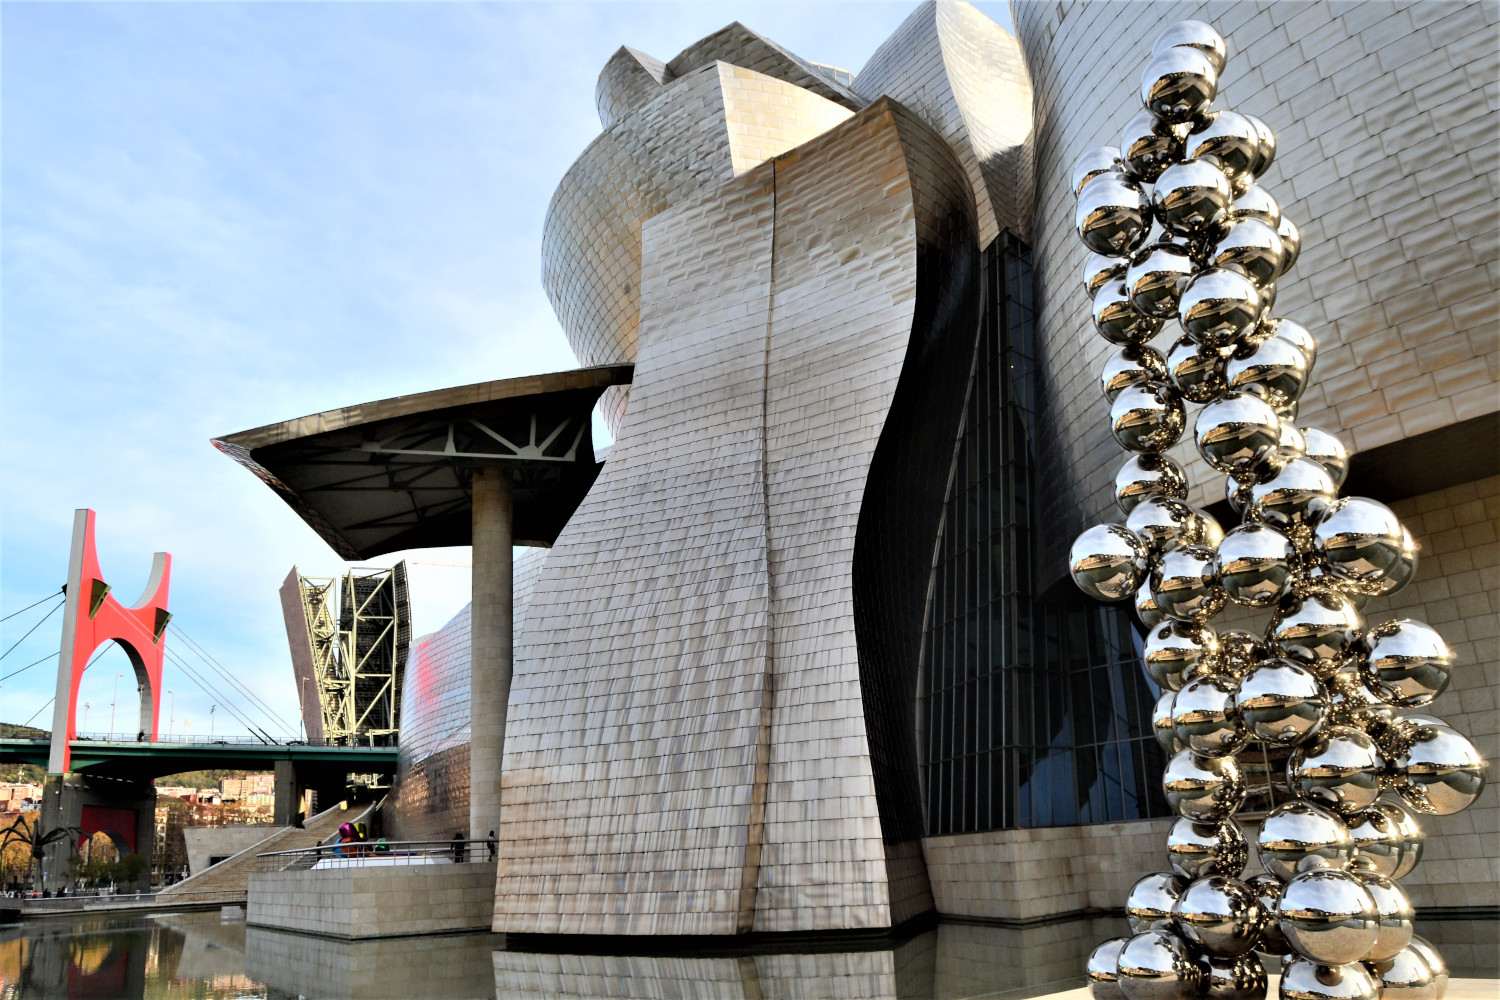 Guggenheim musem in Bilbao